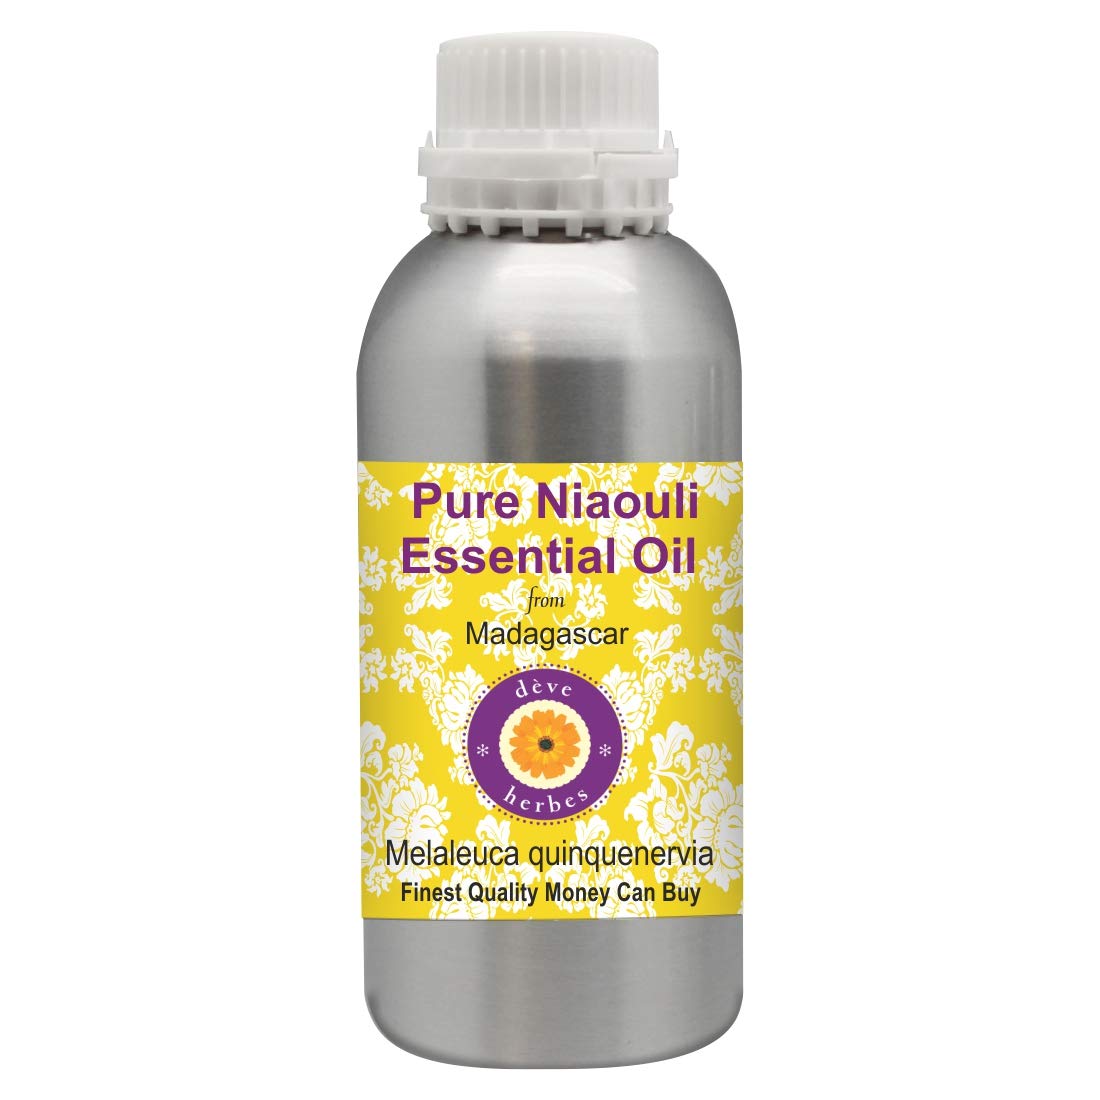 Deve Herbes Pure Niaouli Essential Oil (Melaleuca quinquenervia) Natural Therapeutic Grade Steam Distilled 630ml